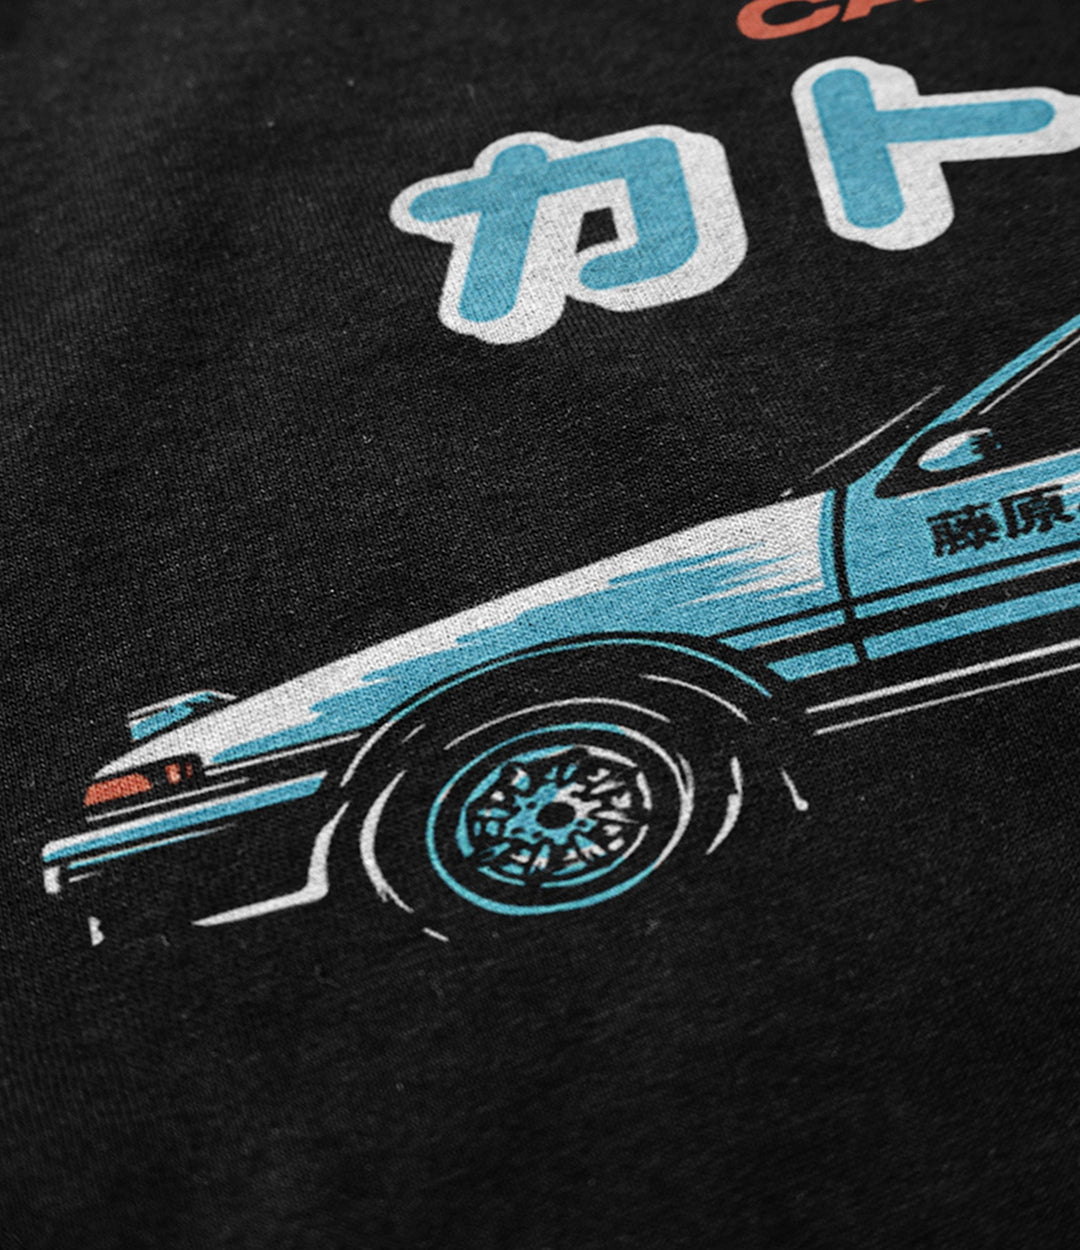 AE86 Vintage T-Shirt at Catori Clothing | Graphic & Anime Tees, Hoodies & Sweatshirts 